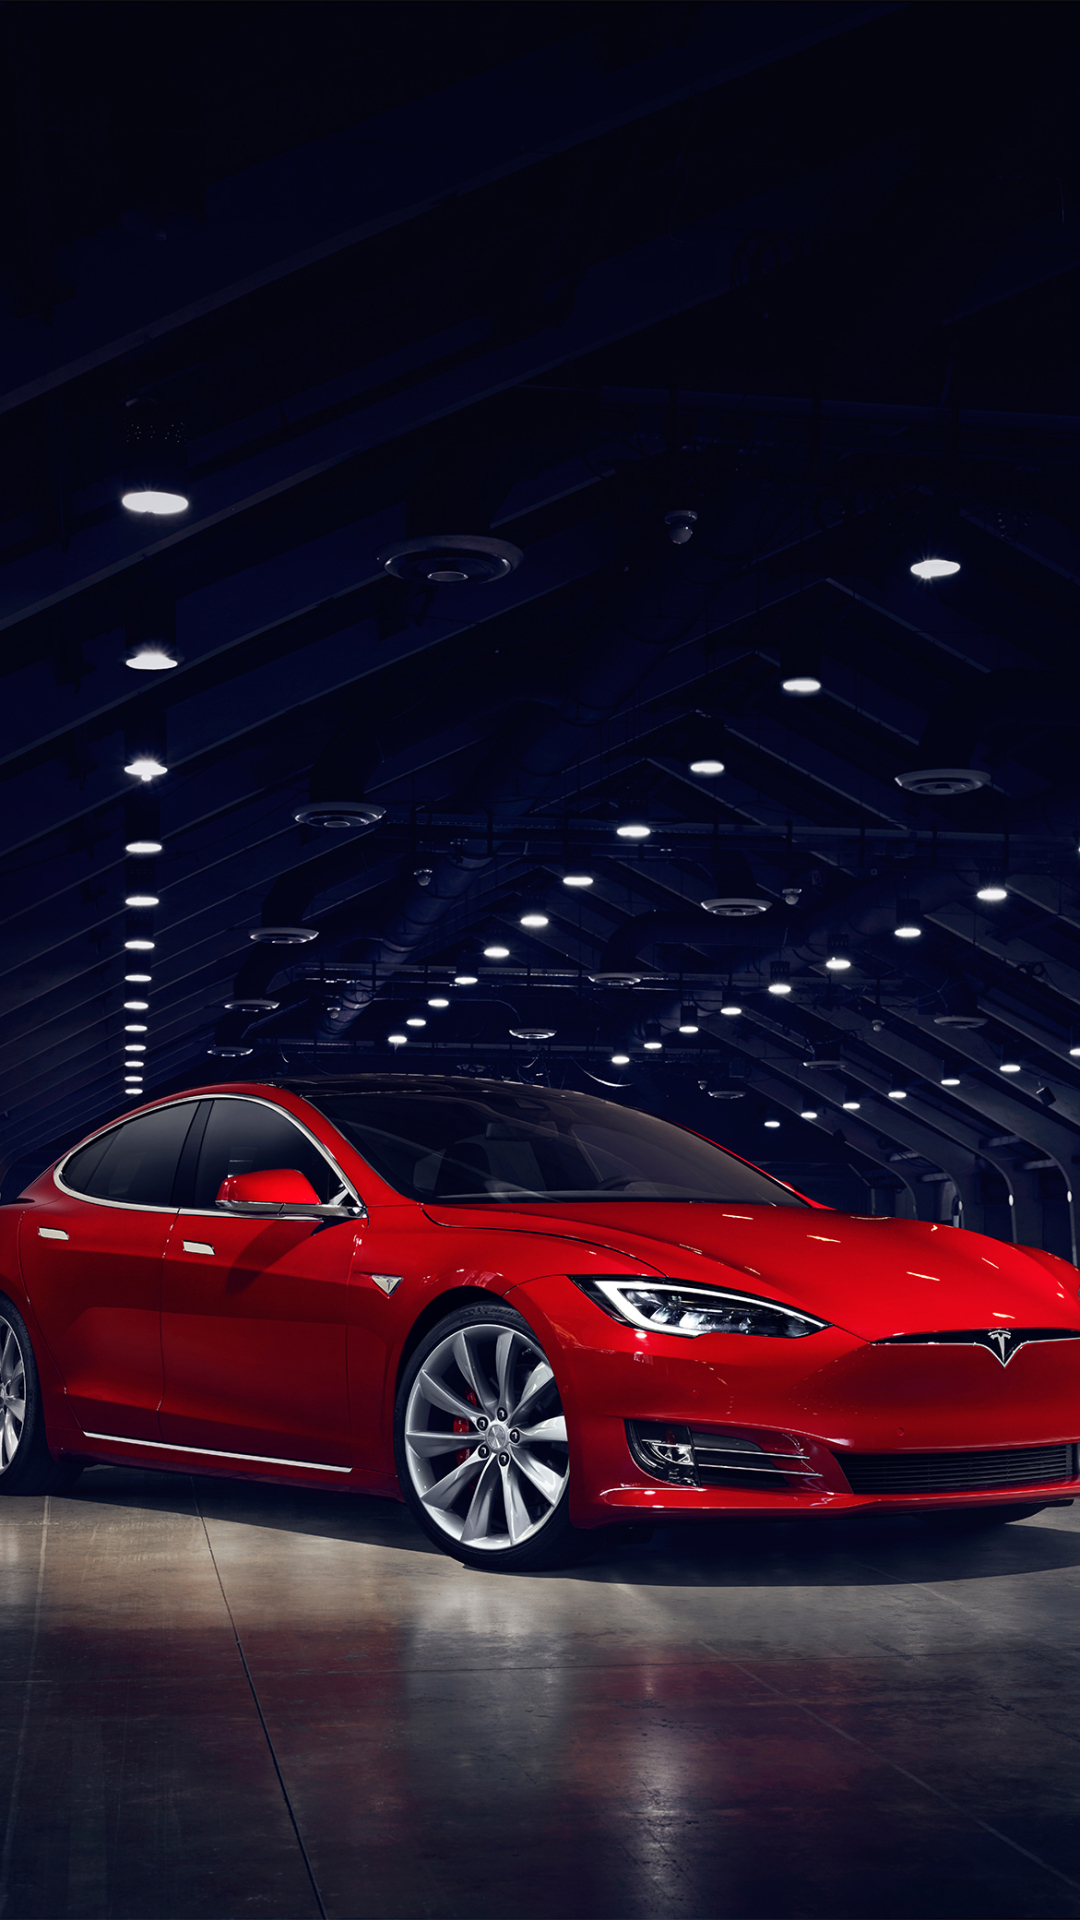 Descarga gratuita de fondo de pantalla para móvil de Coche, Tesla Modelo S, Motores Tesla, Vehículo, Vehículos.